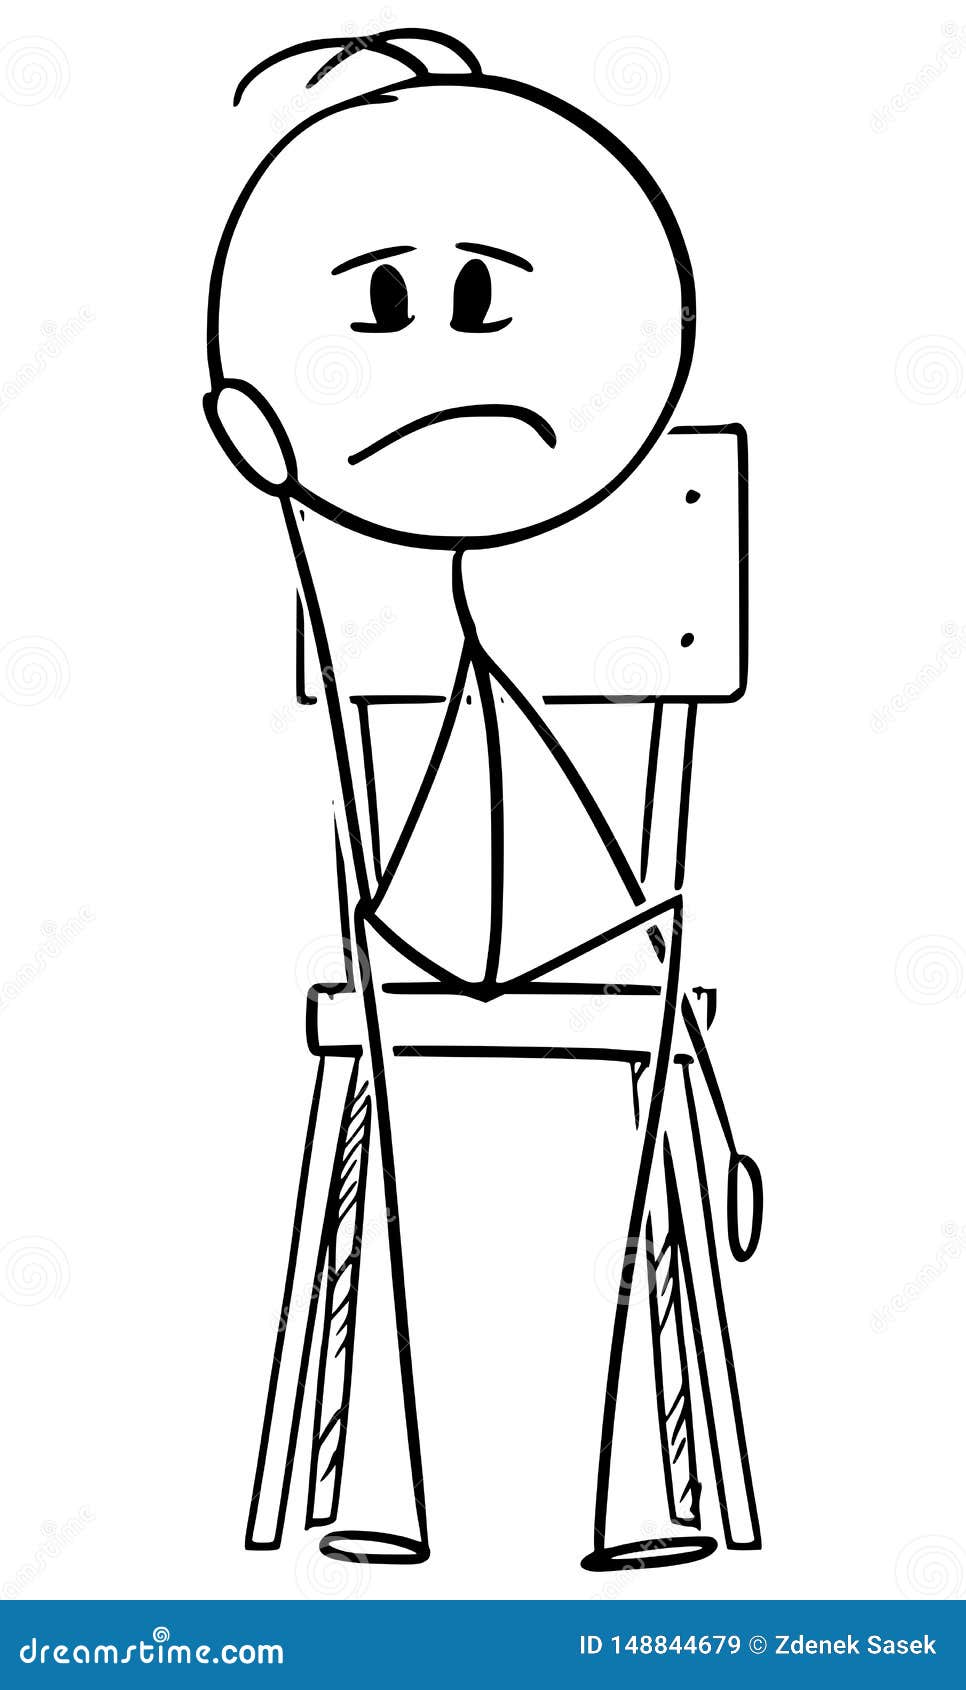 sad man icon, fatigue and pain illustration, stickman in depression, stick  figure human silhouette Stock Vector